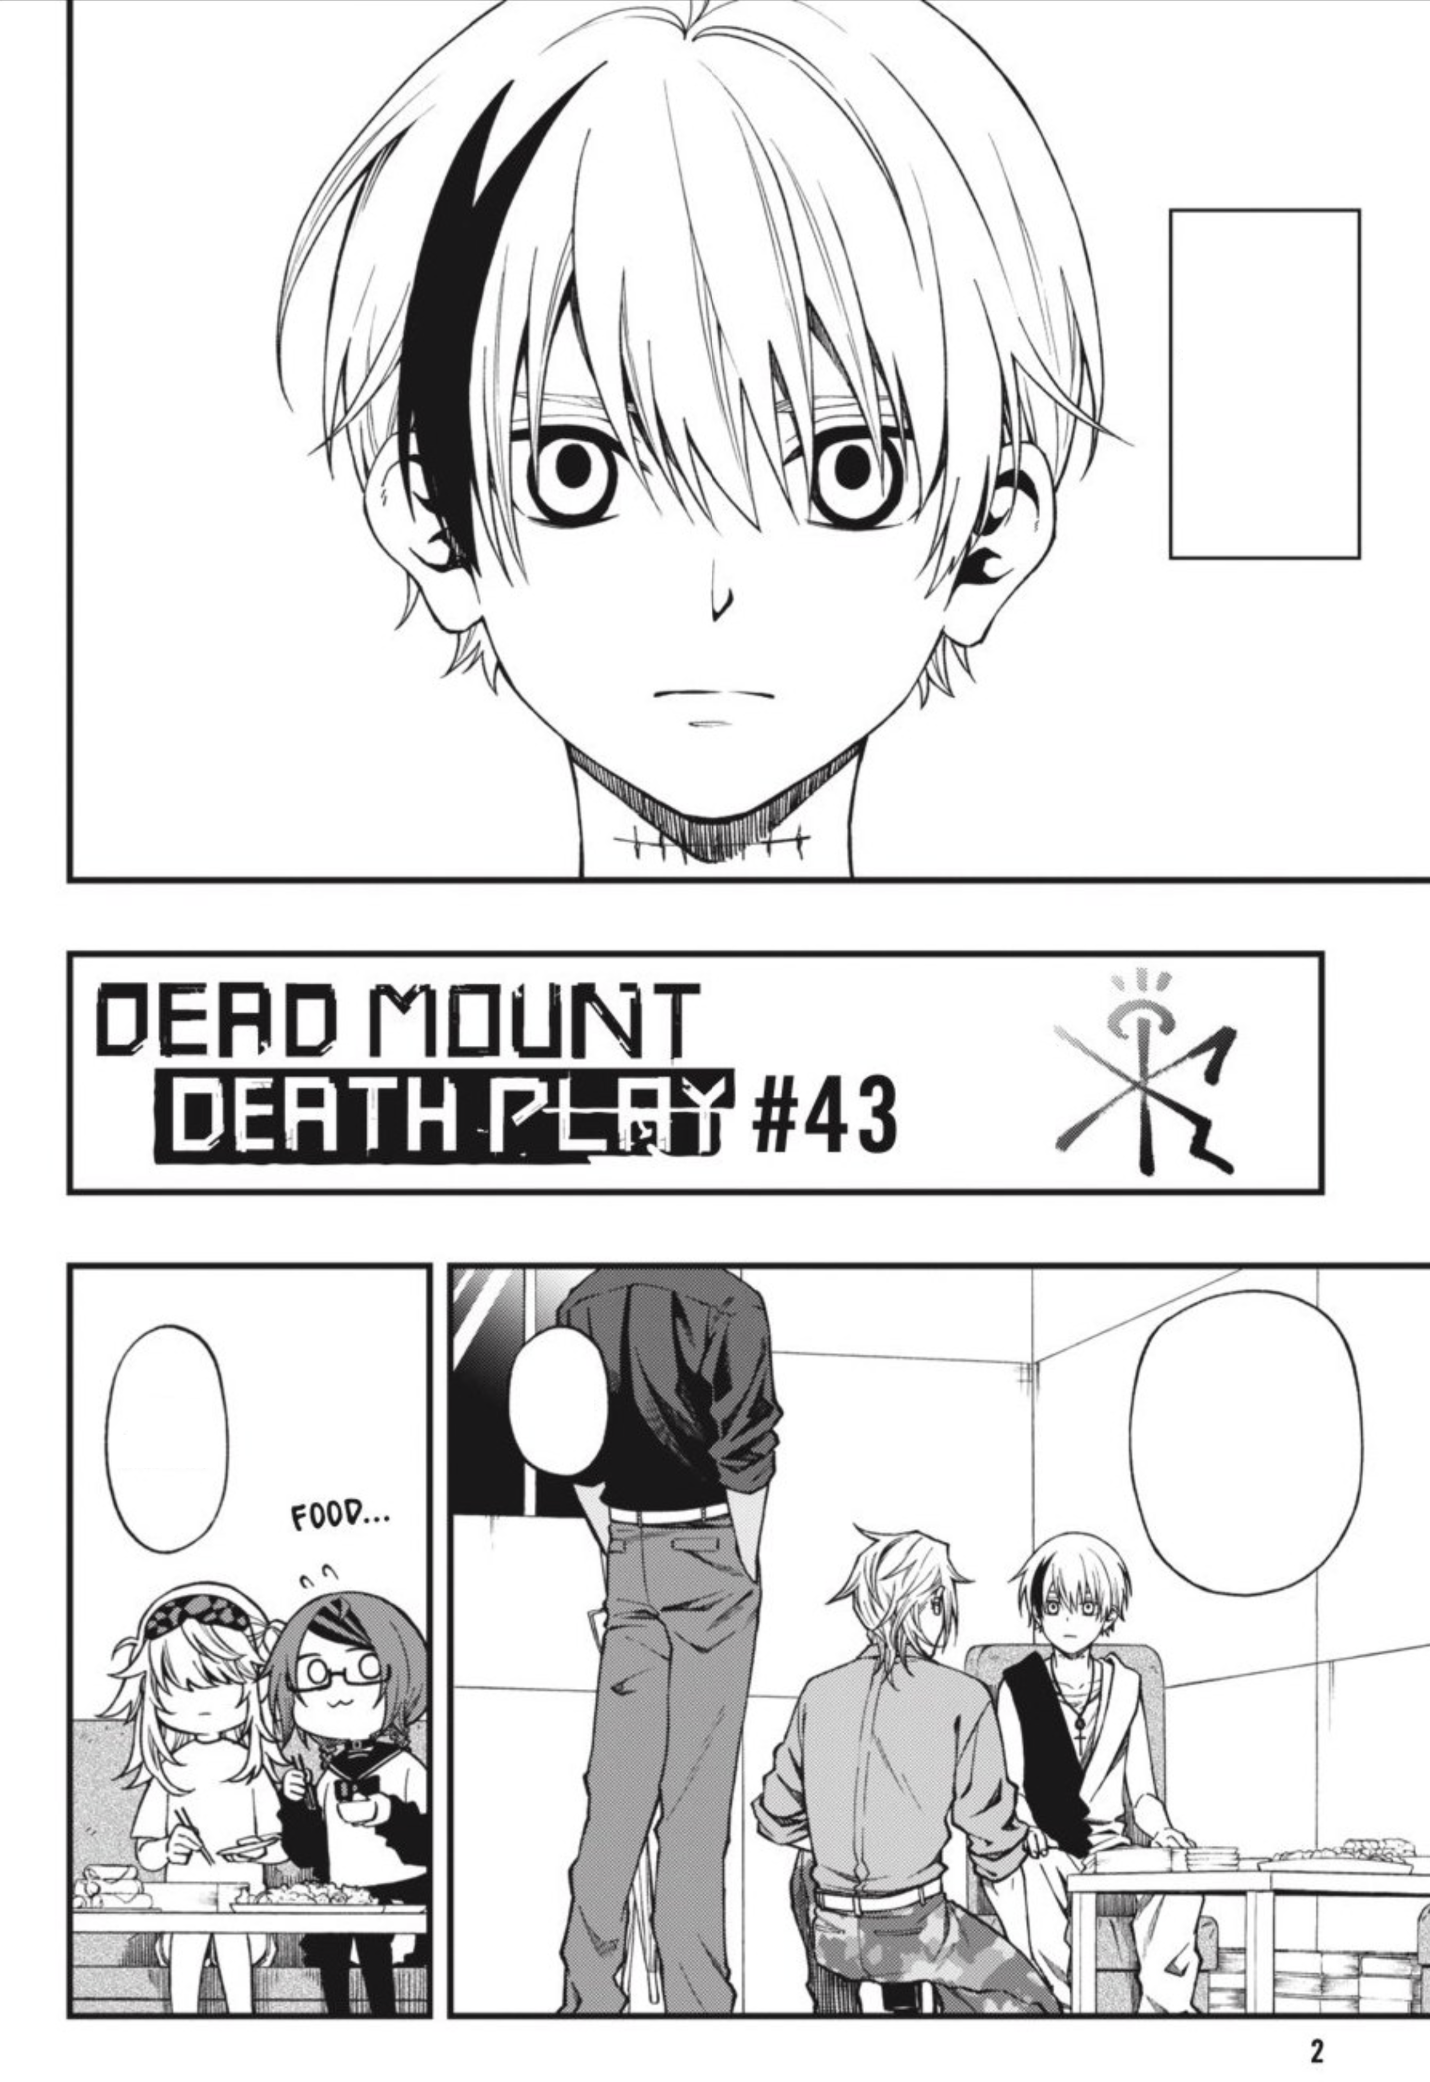 Sayo Shinoyama, Dead Mount Death Play Wiki